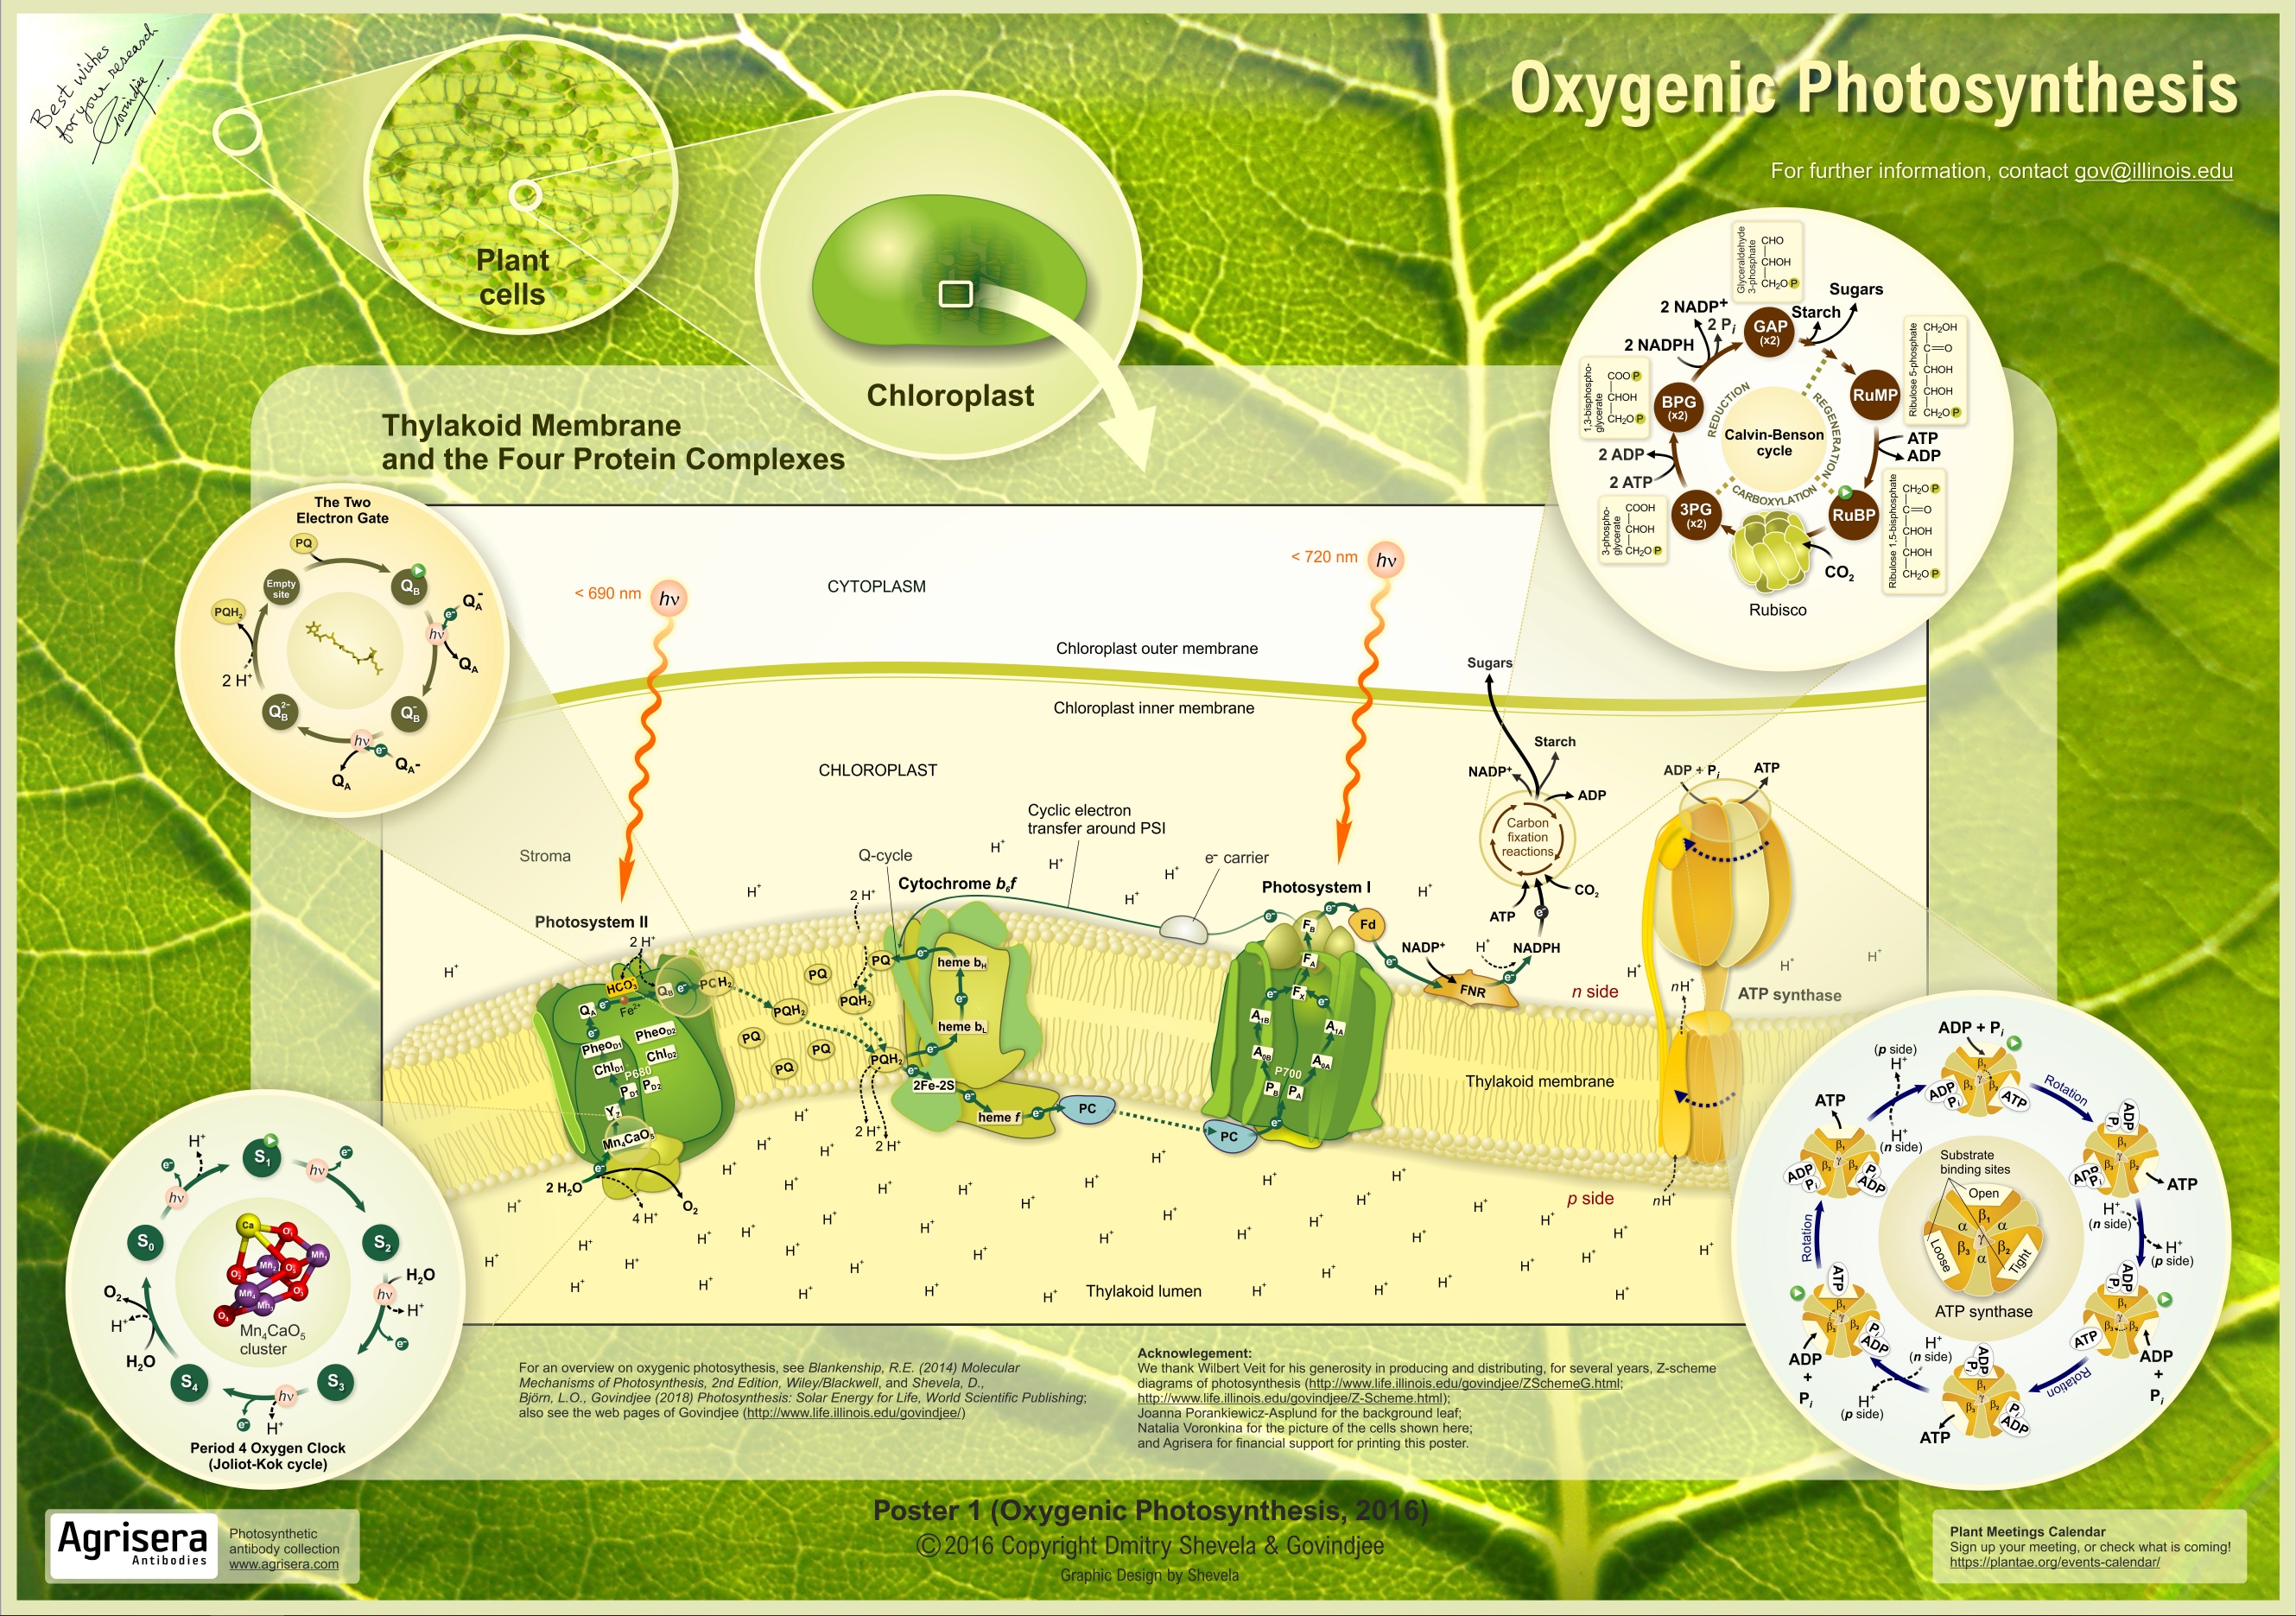 Agrisera Poster 1: Oxygenic Photosynthesis